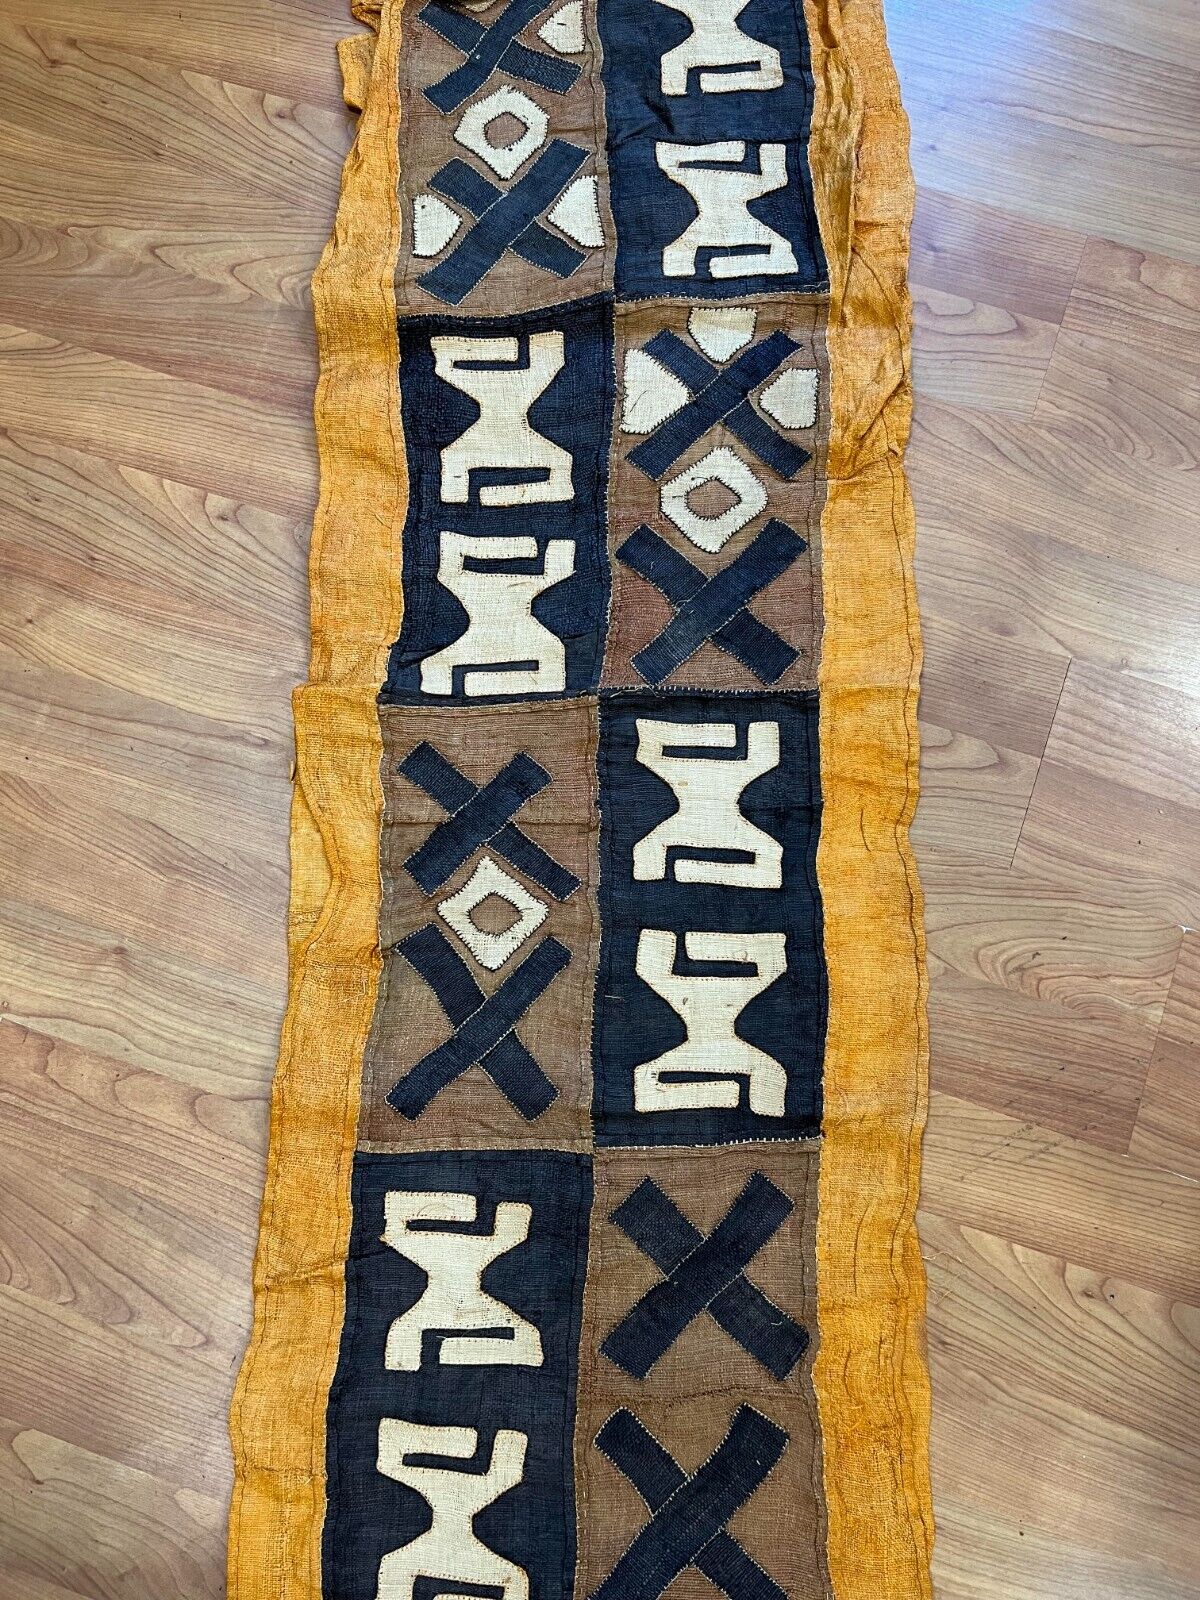 genuine 10 feet African (Congo) Kuba Raffia cloth fabric, natural woven handmade